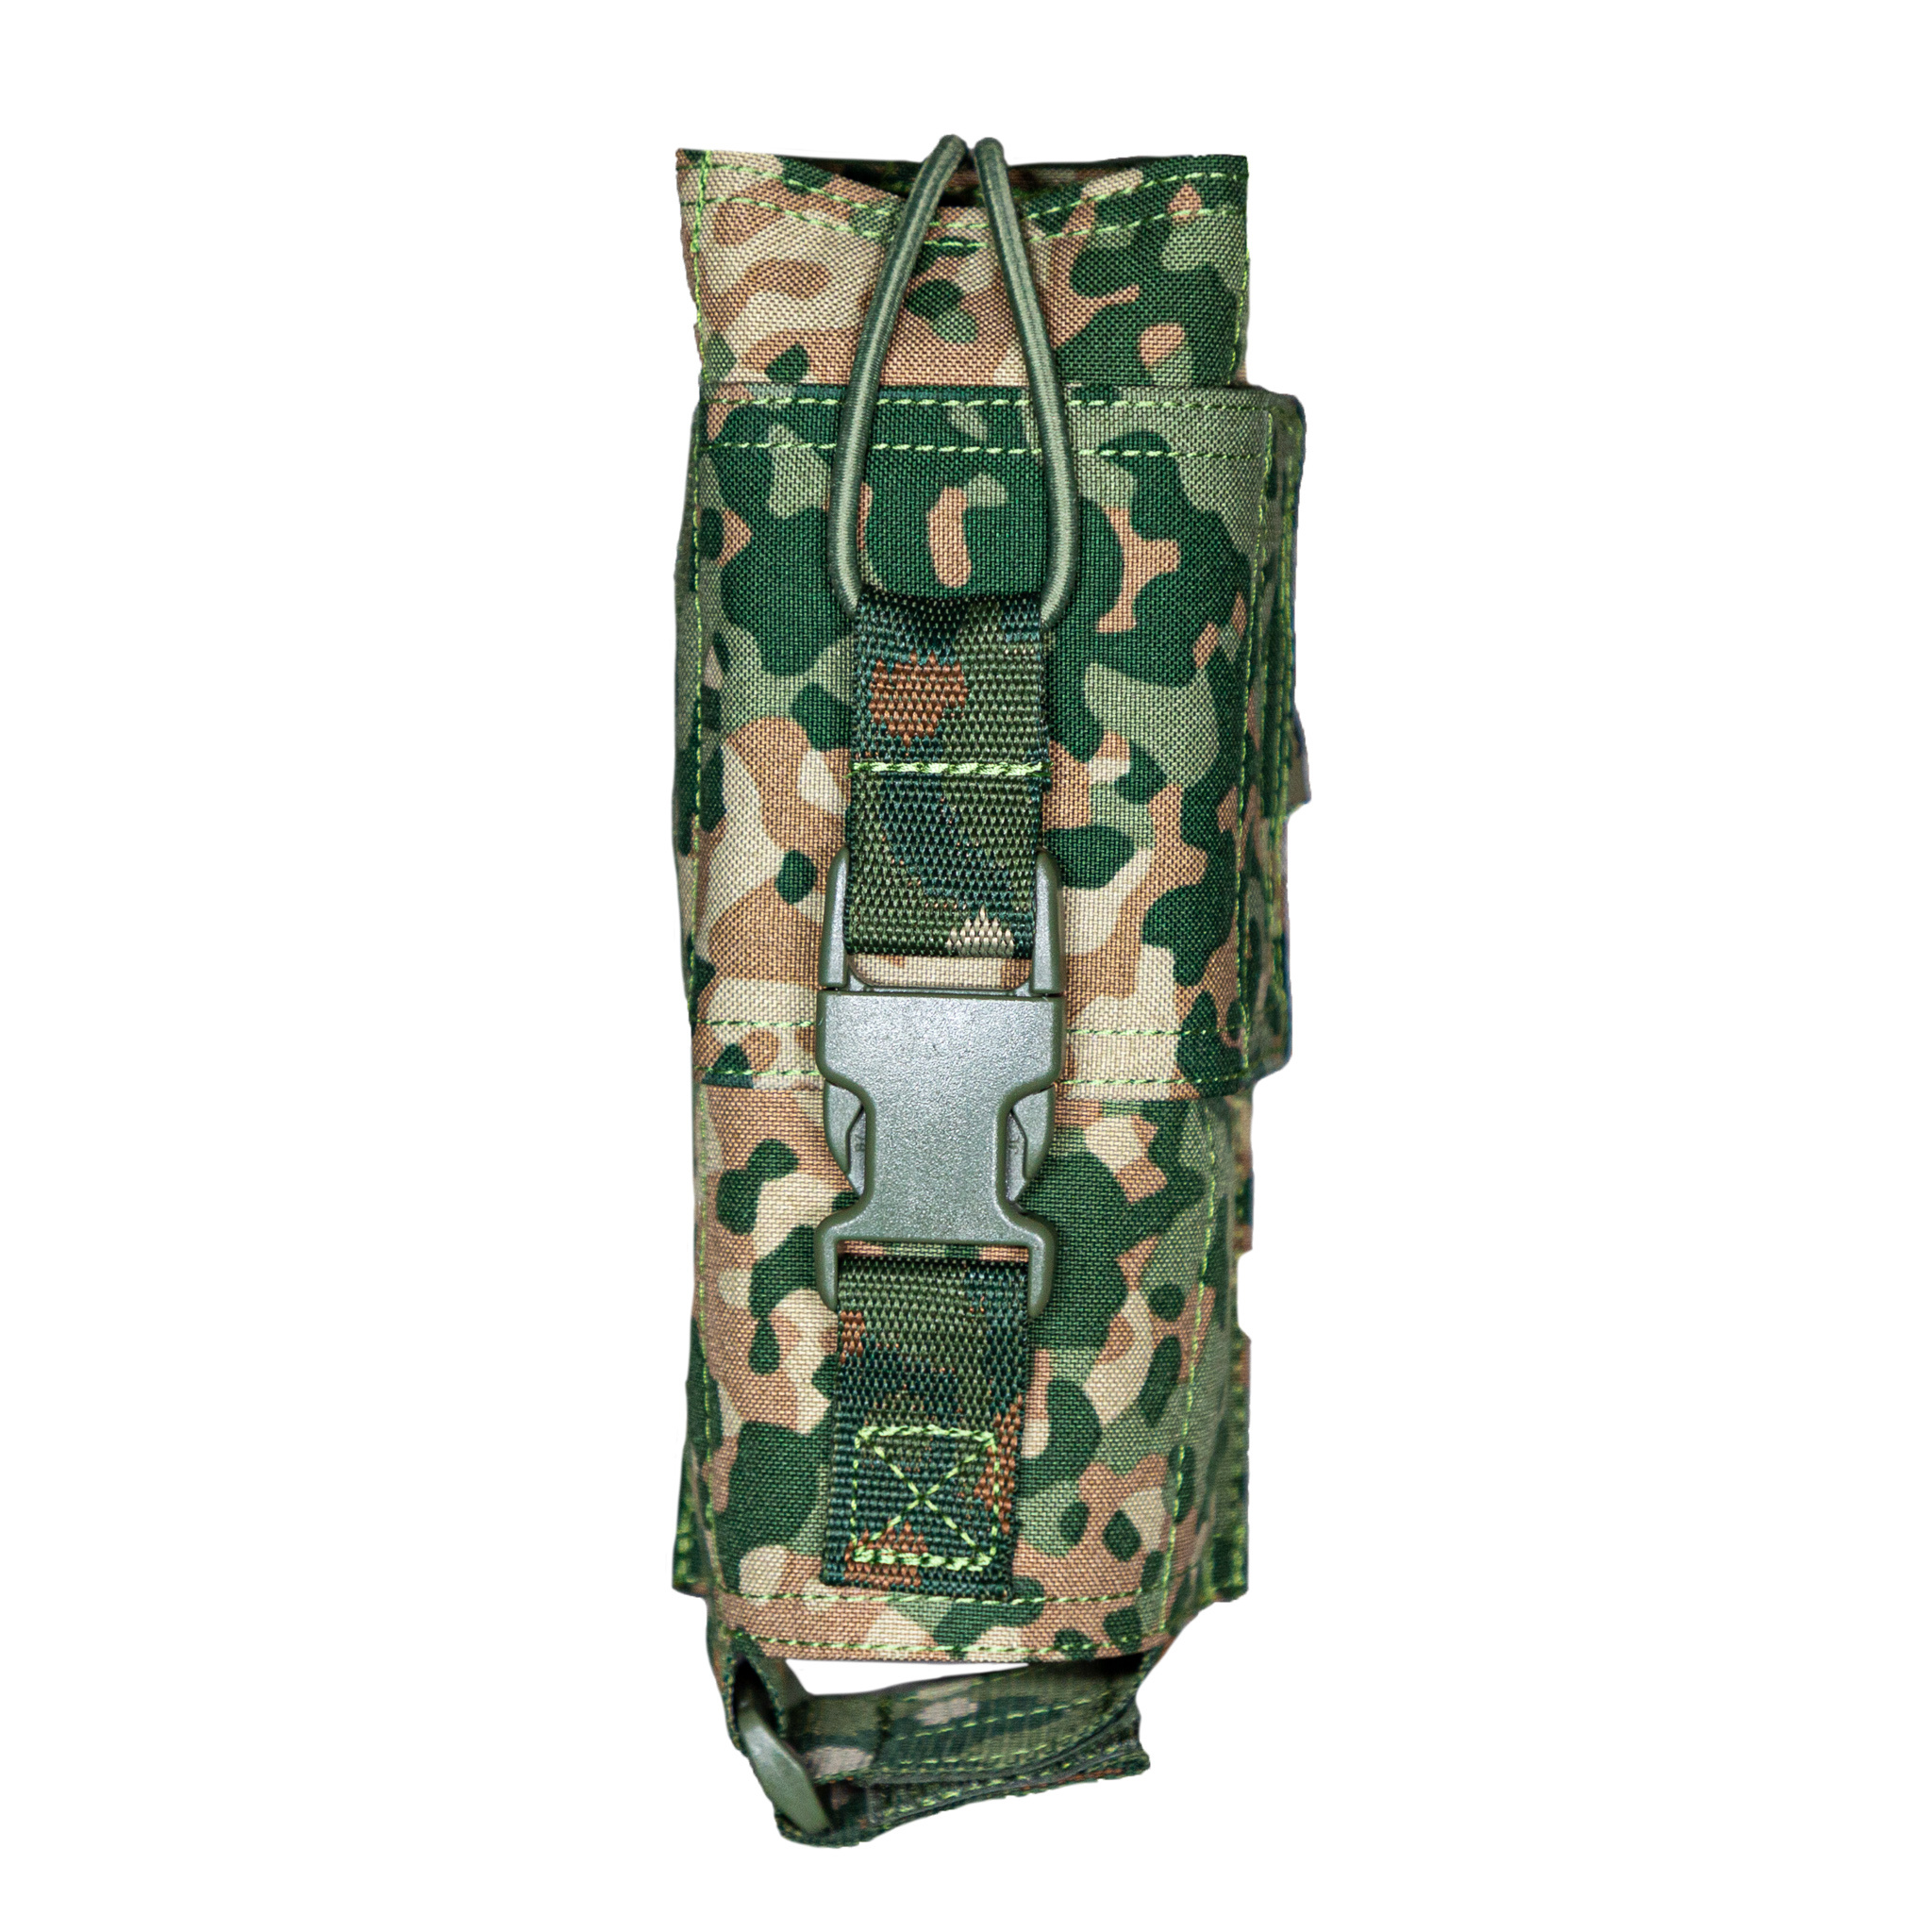 Enhanced Shoulder Pads – BDS Tactical Gear